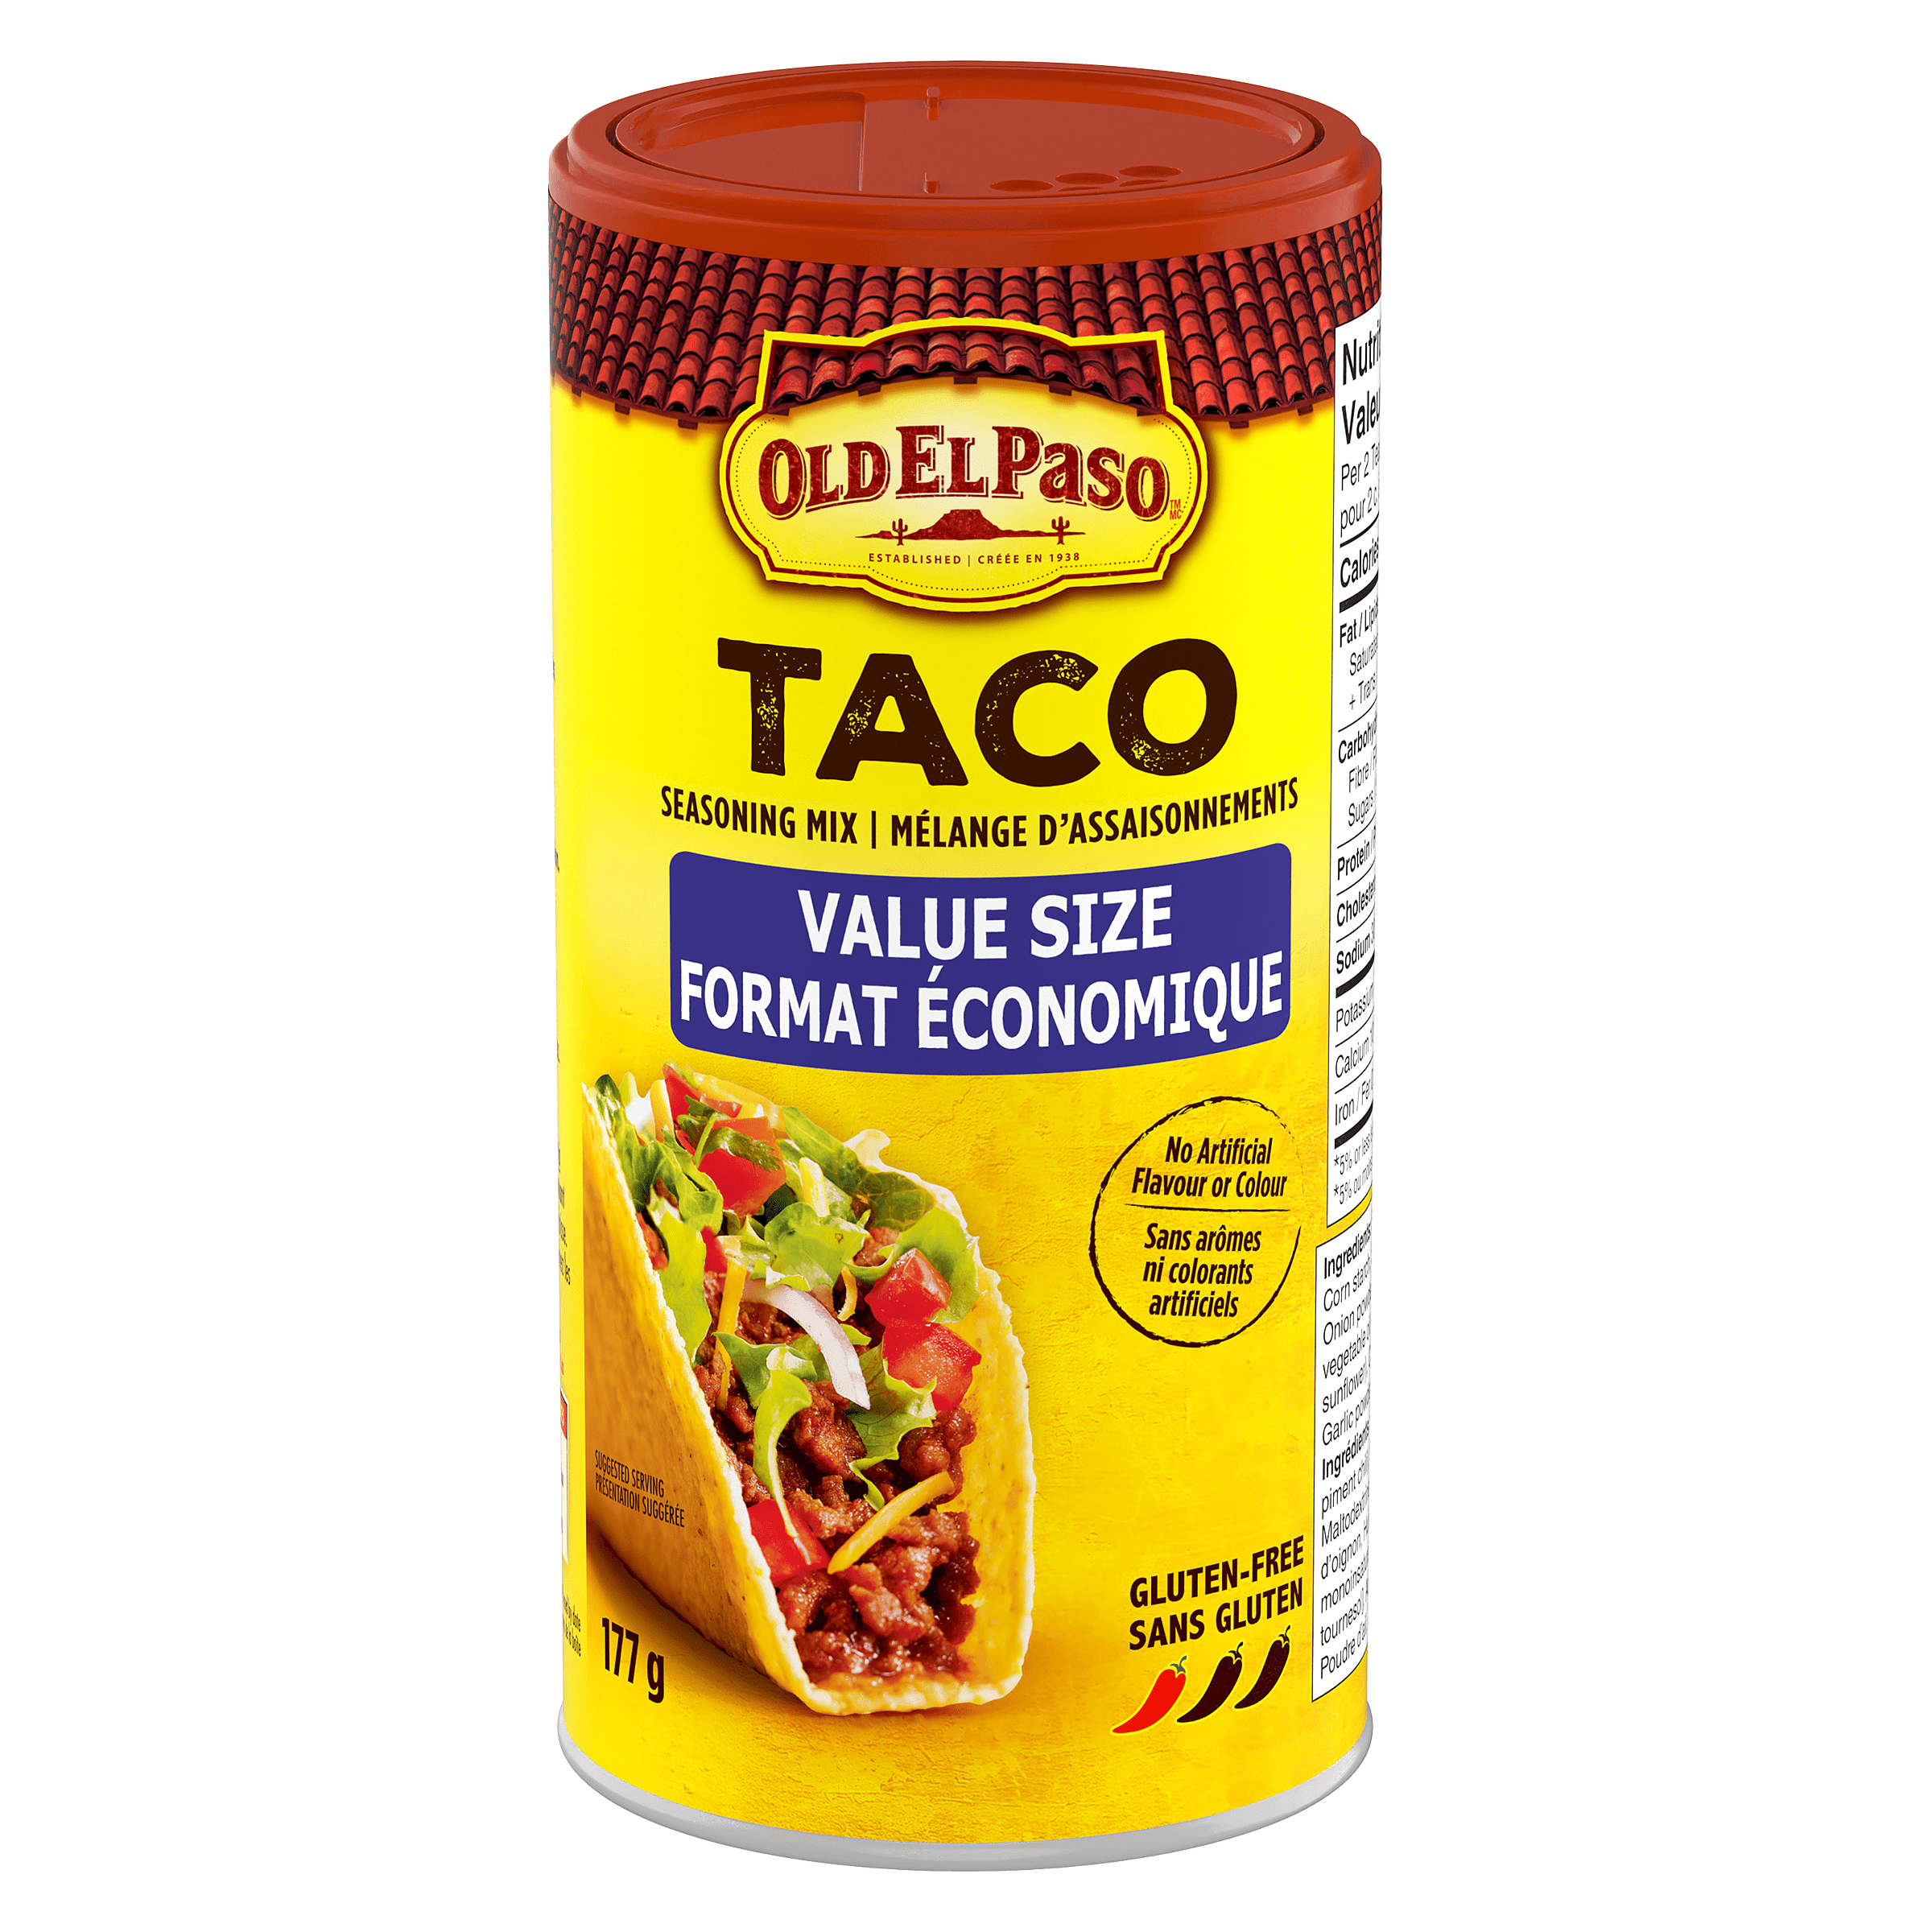 Taco Seasoning Mix Value Size Old El Paso 5937